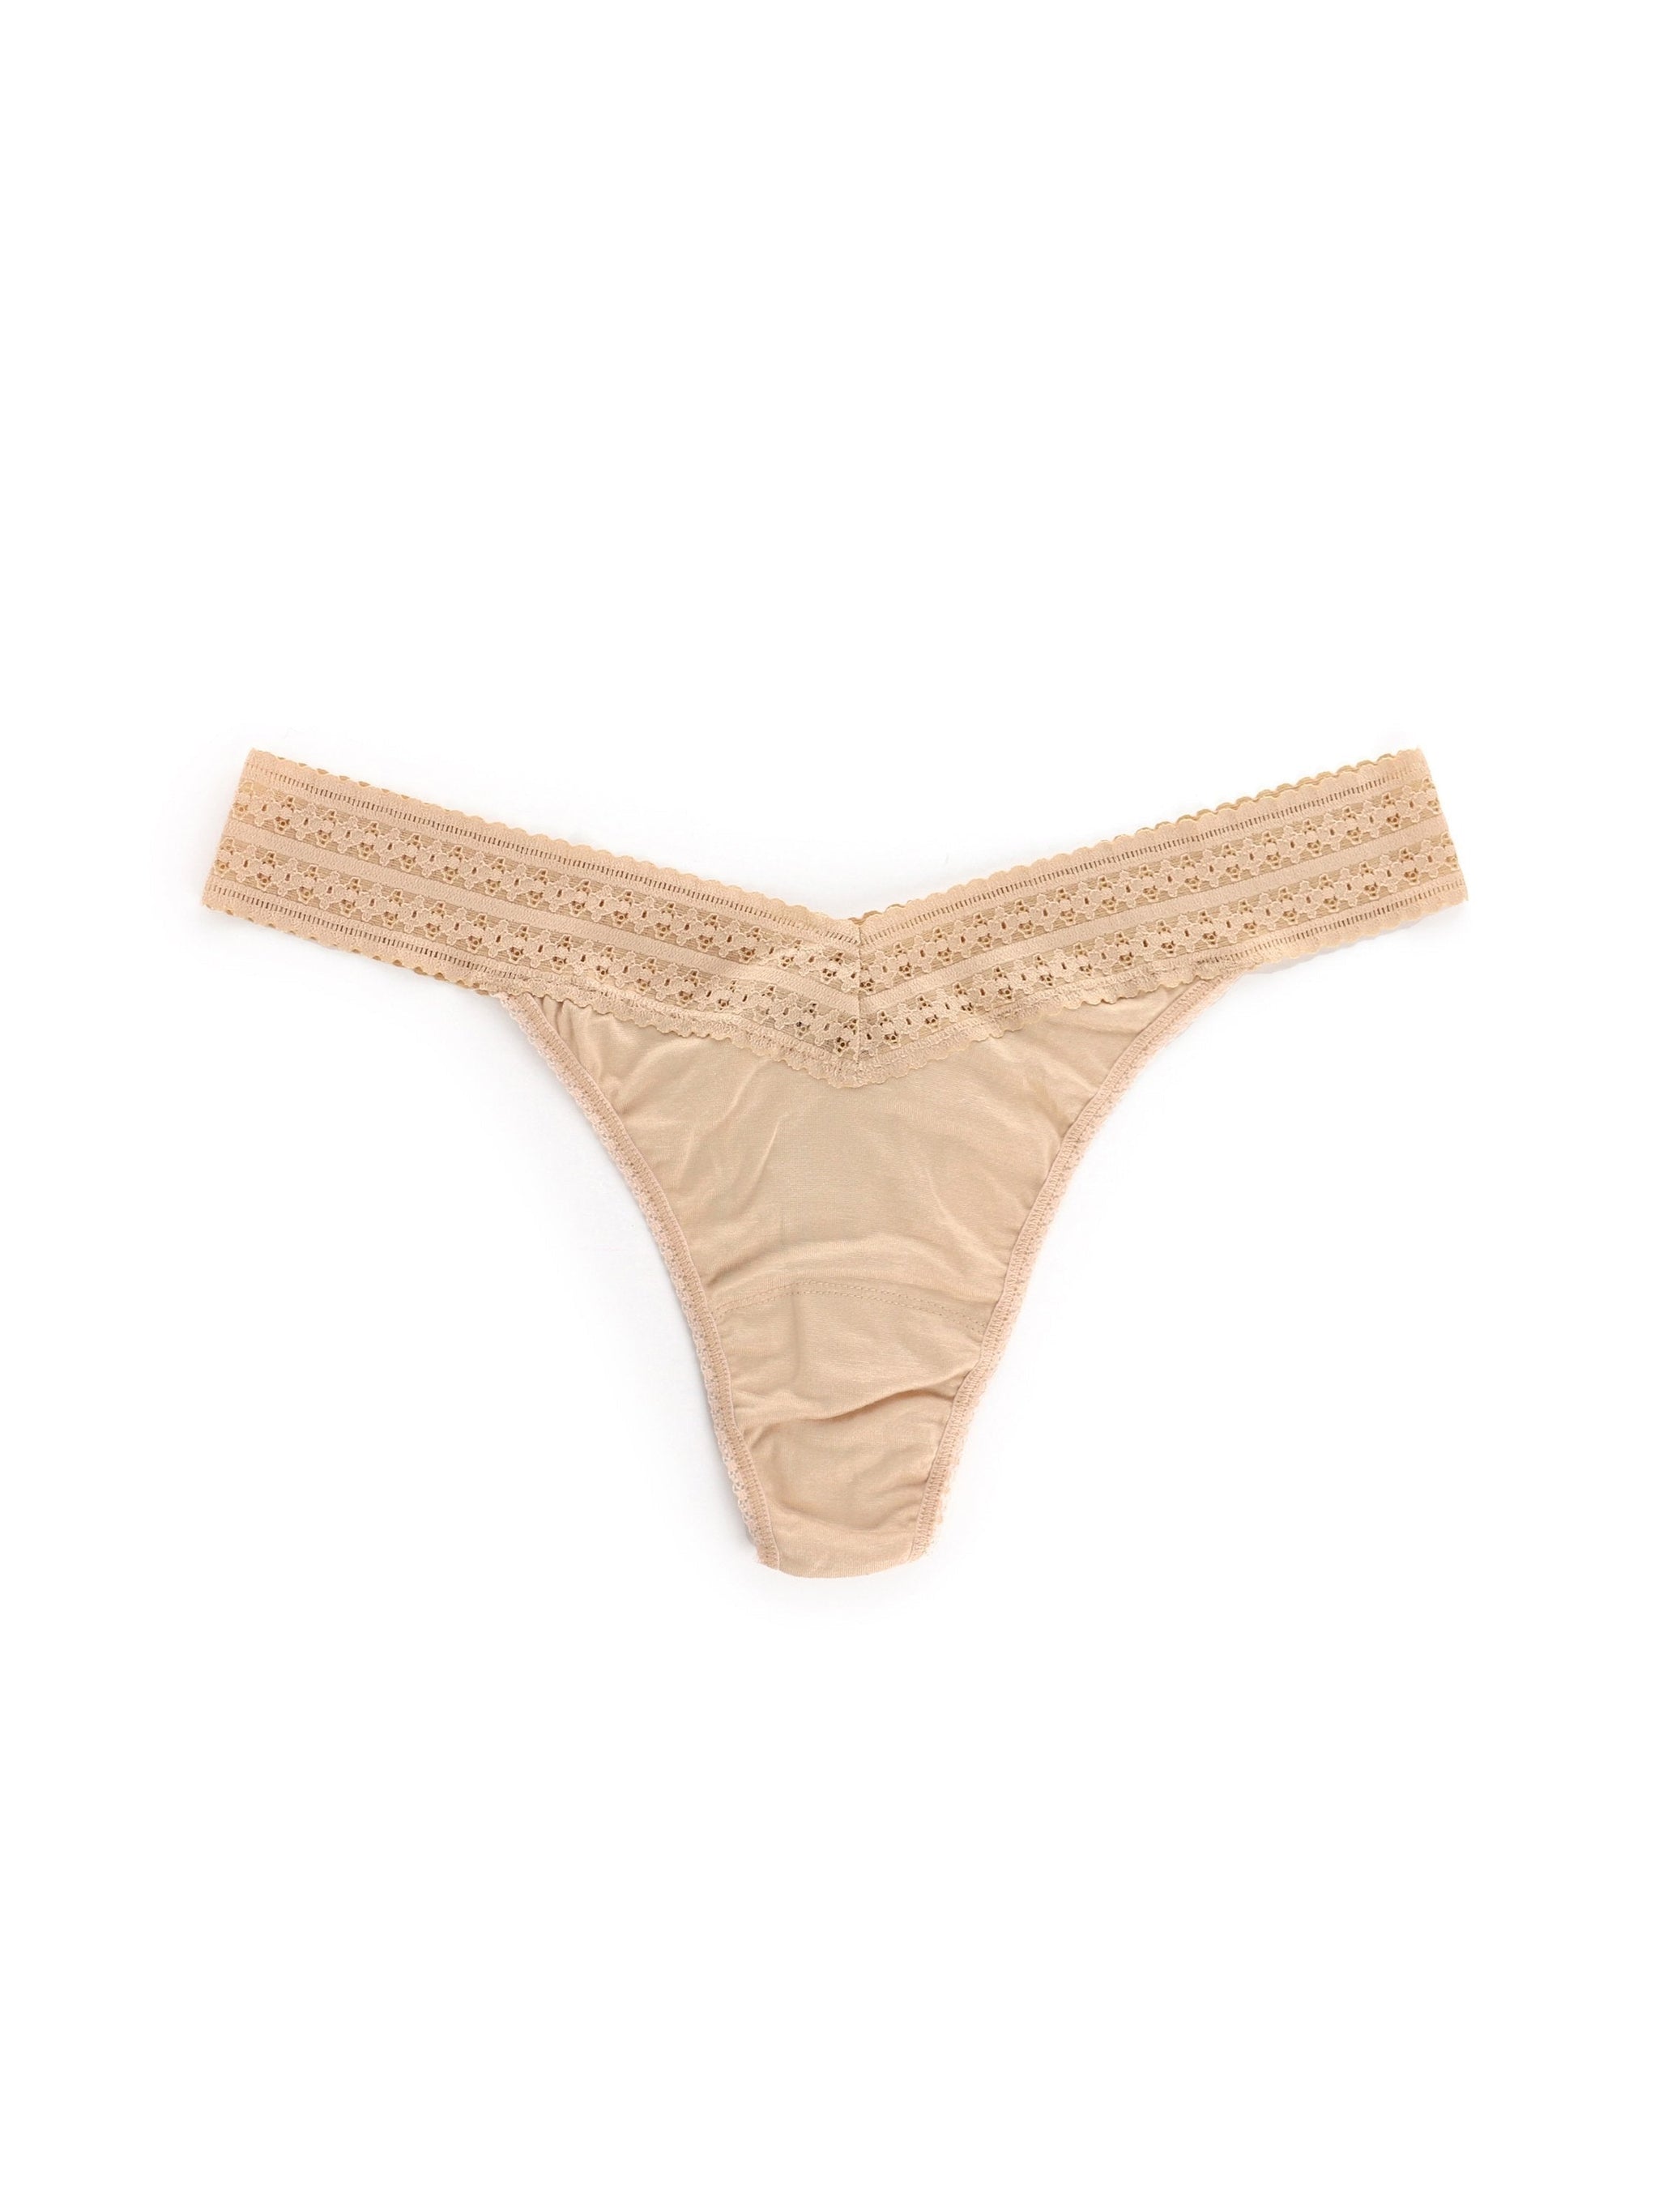 Large Online Exclusives - Thongs, Panties, Lingerie & Bralettes